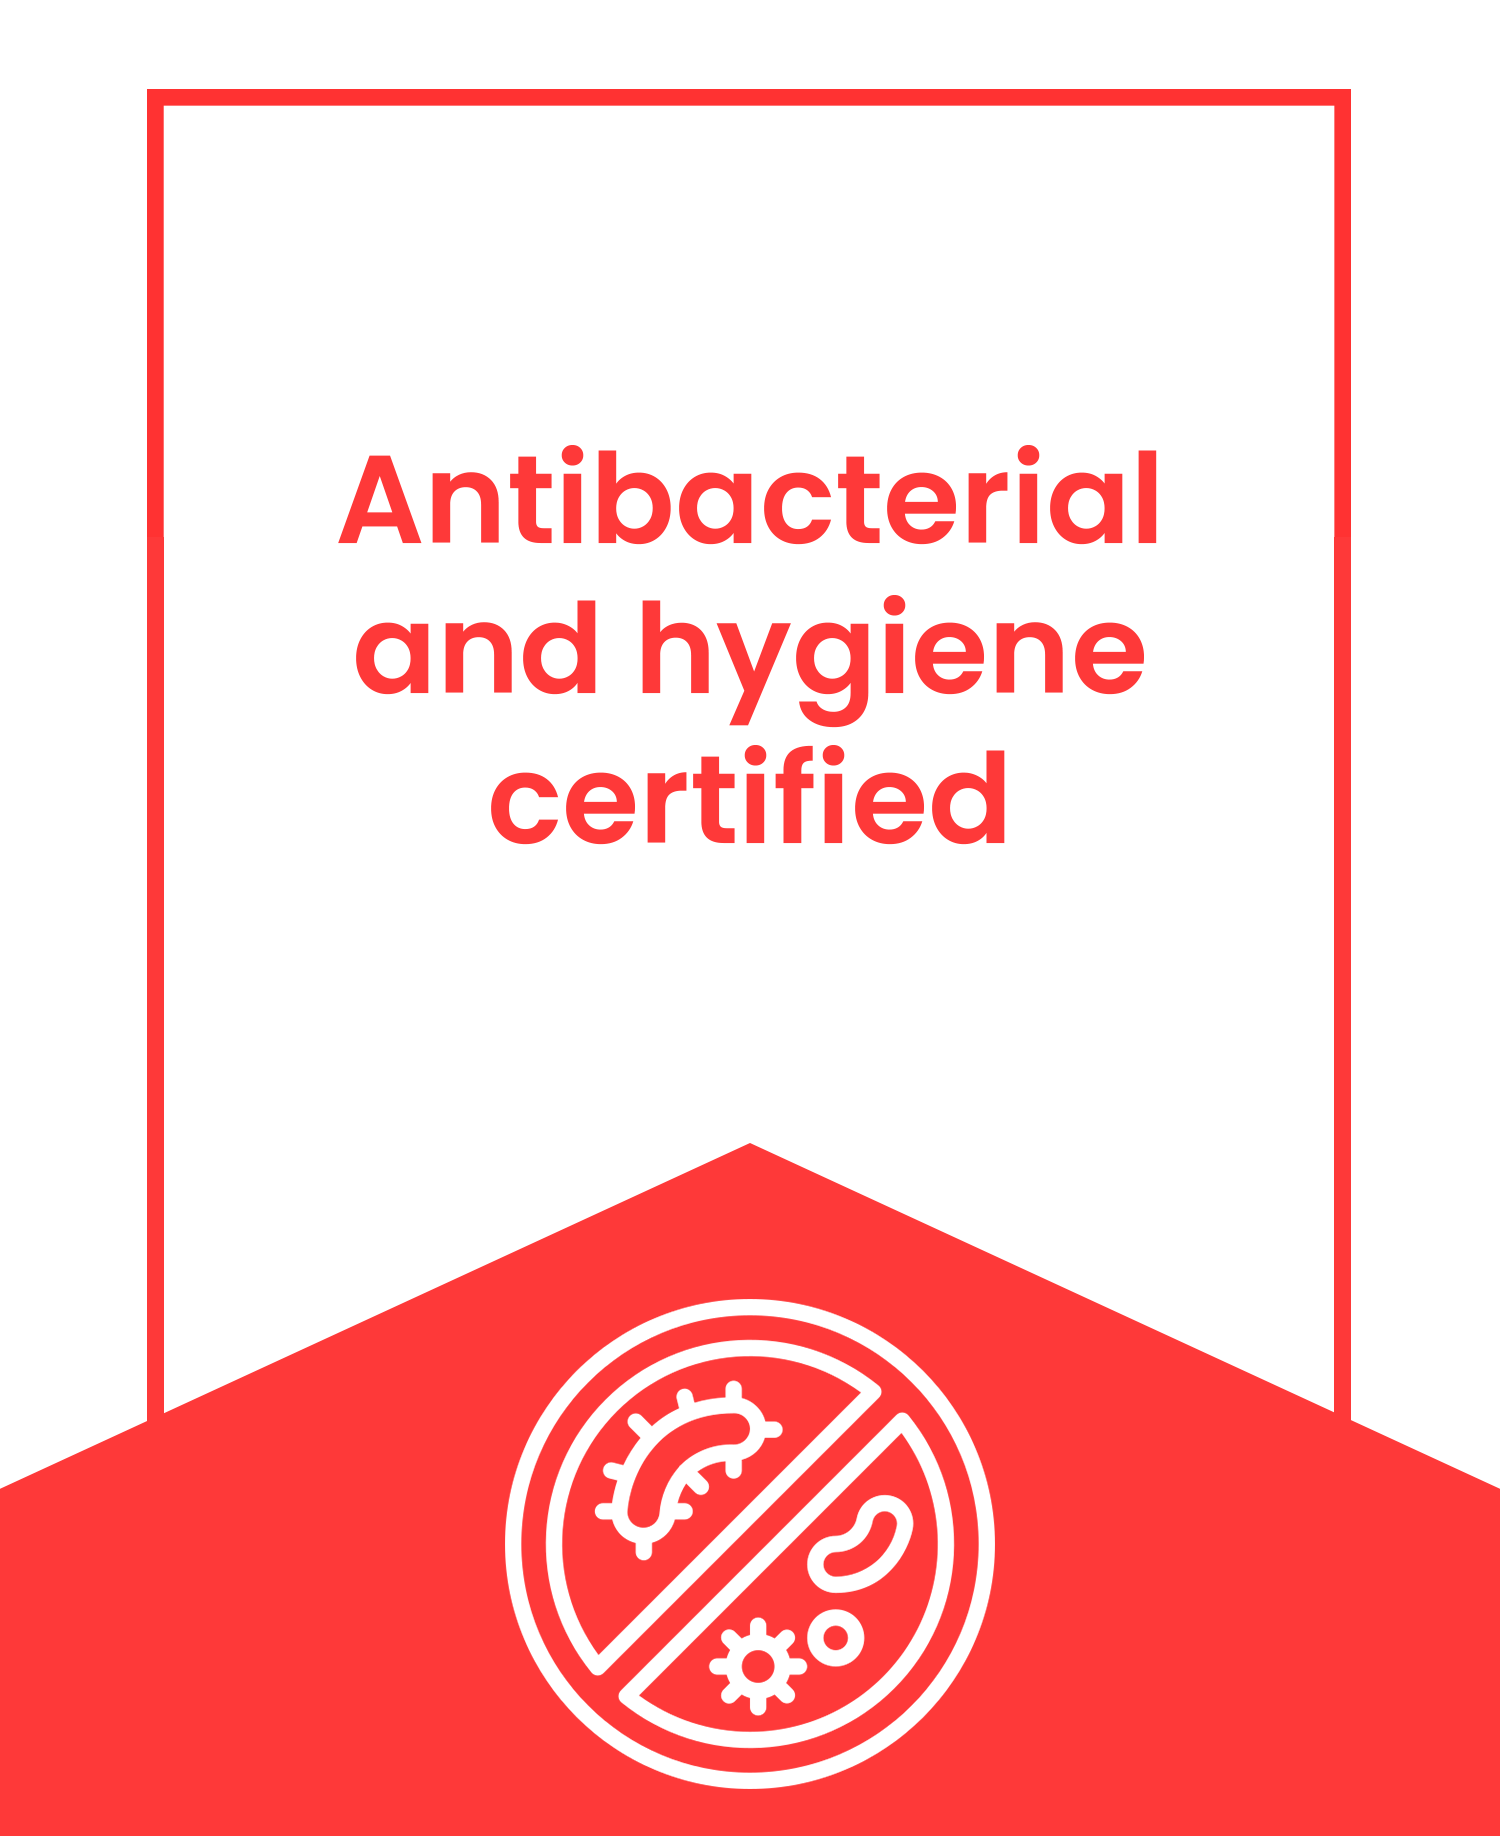 Antibacterial and hygiene certified